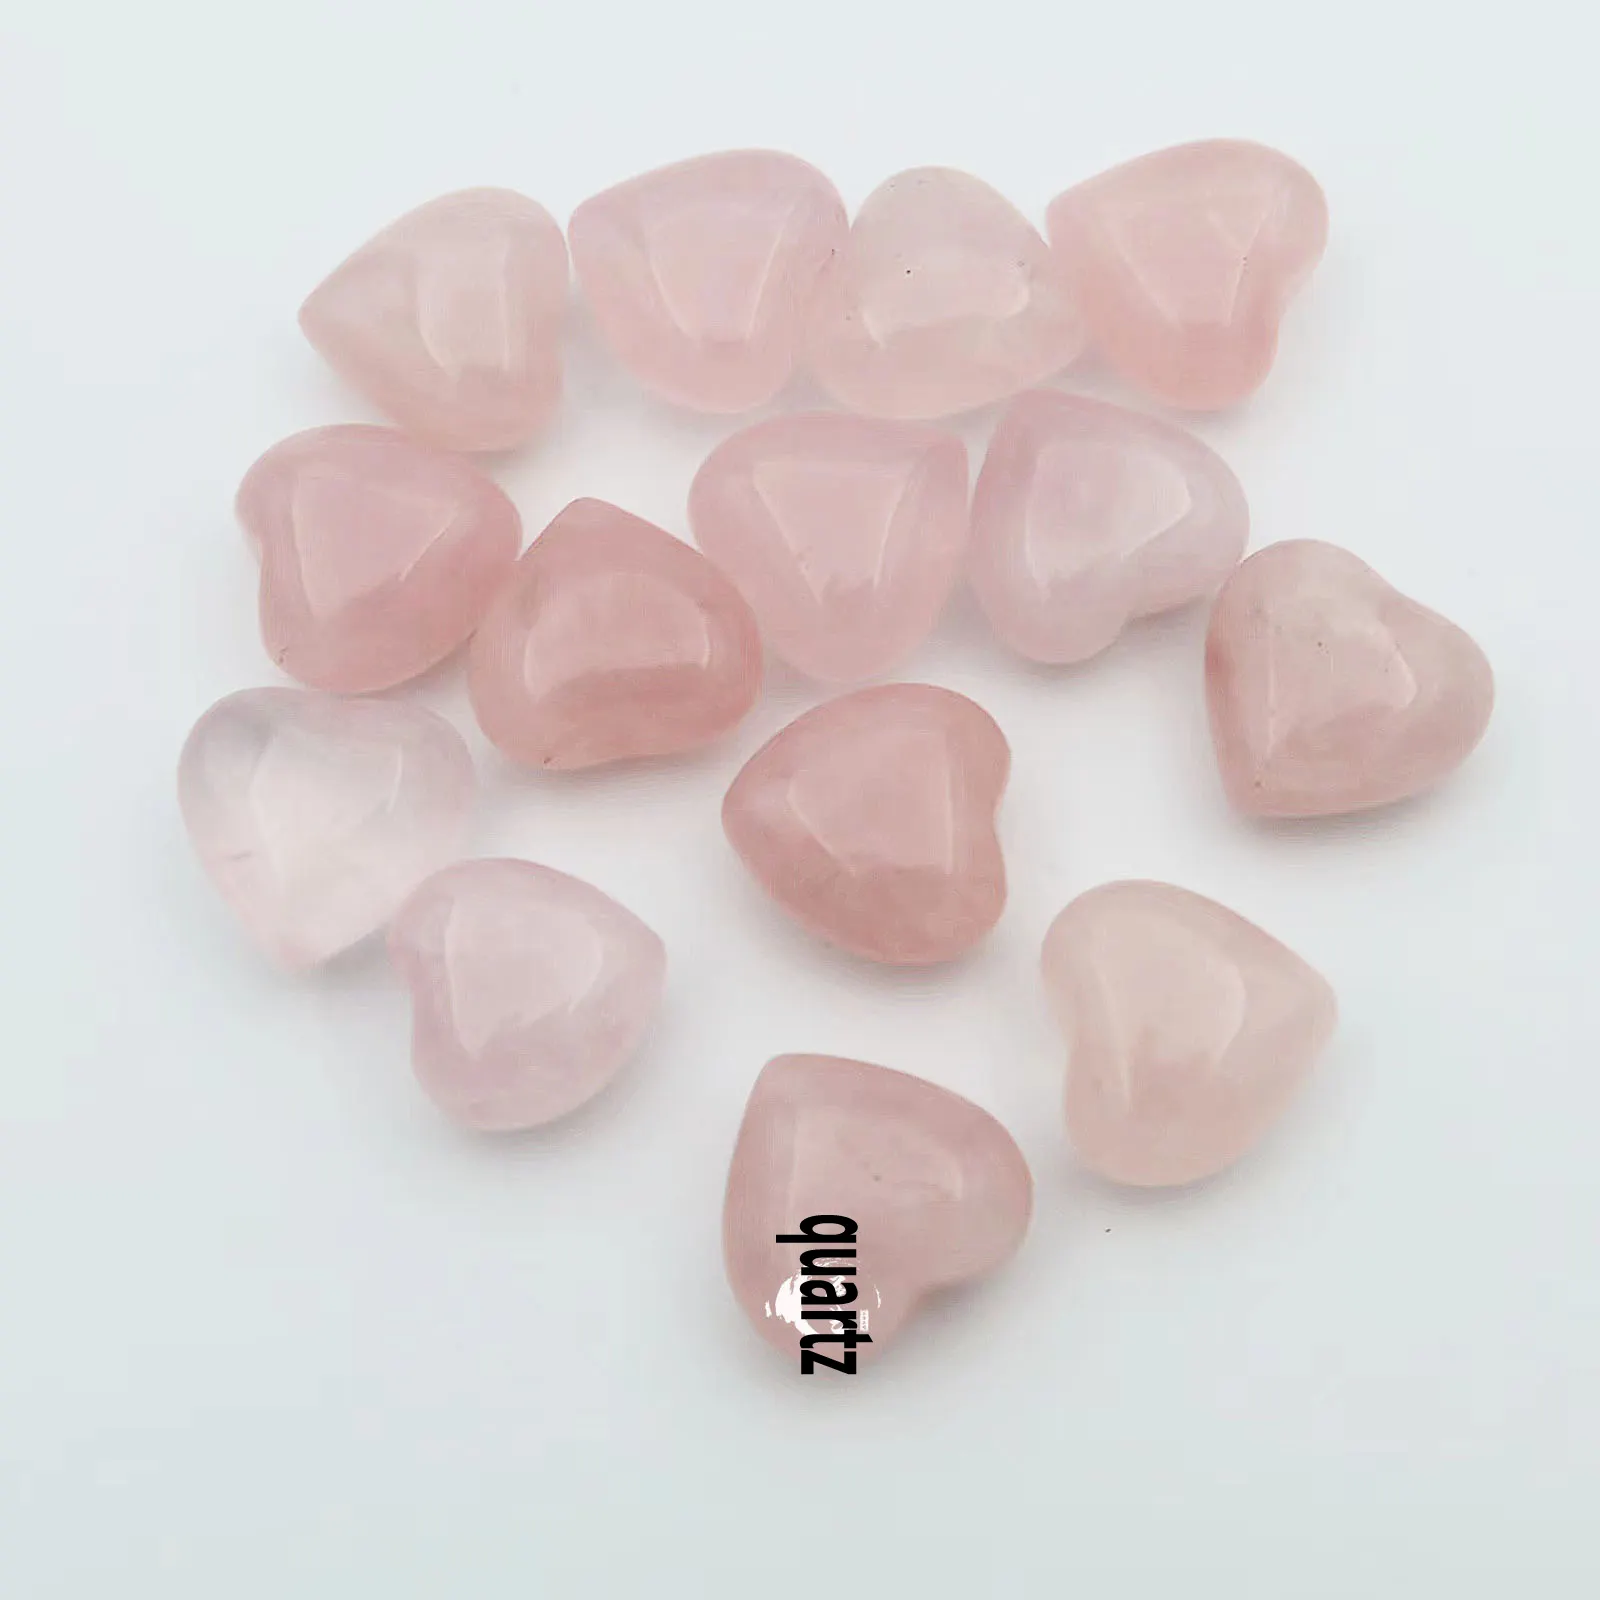 Natural Stone Carving Rose quartz Reiki Mini Crystal Heart Shaped 15mm Gems Crafts pink Quartz Heart For Gift